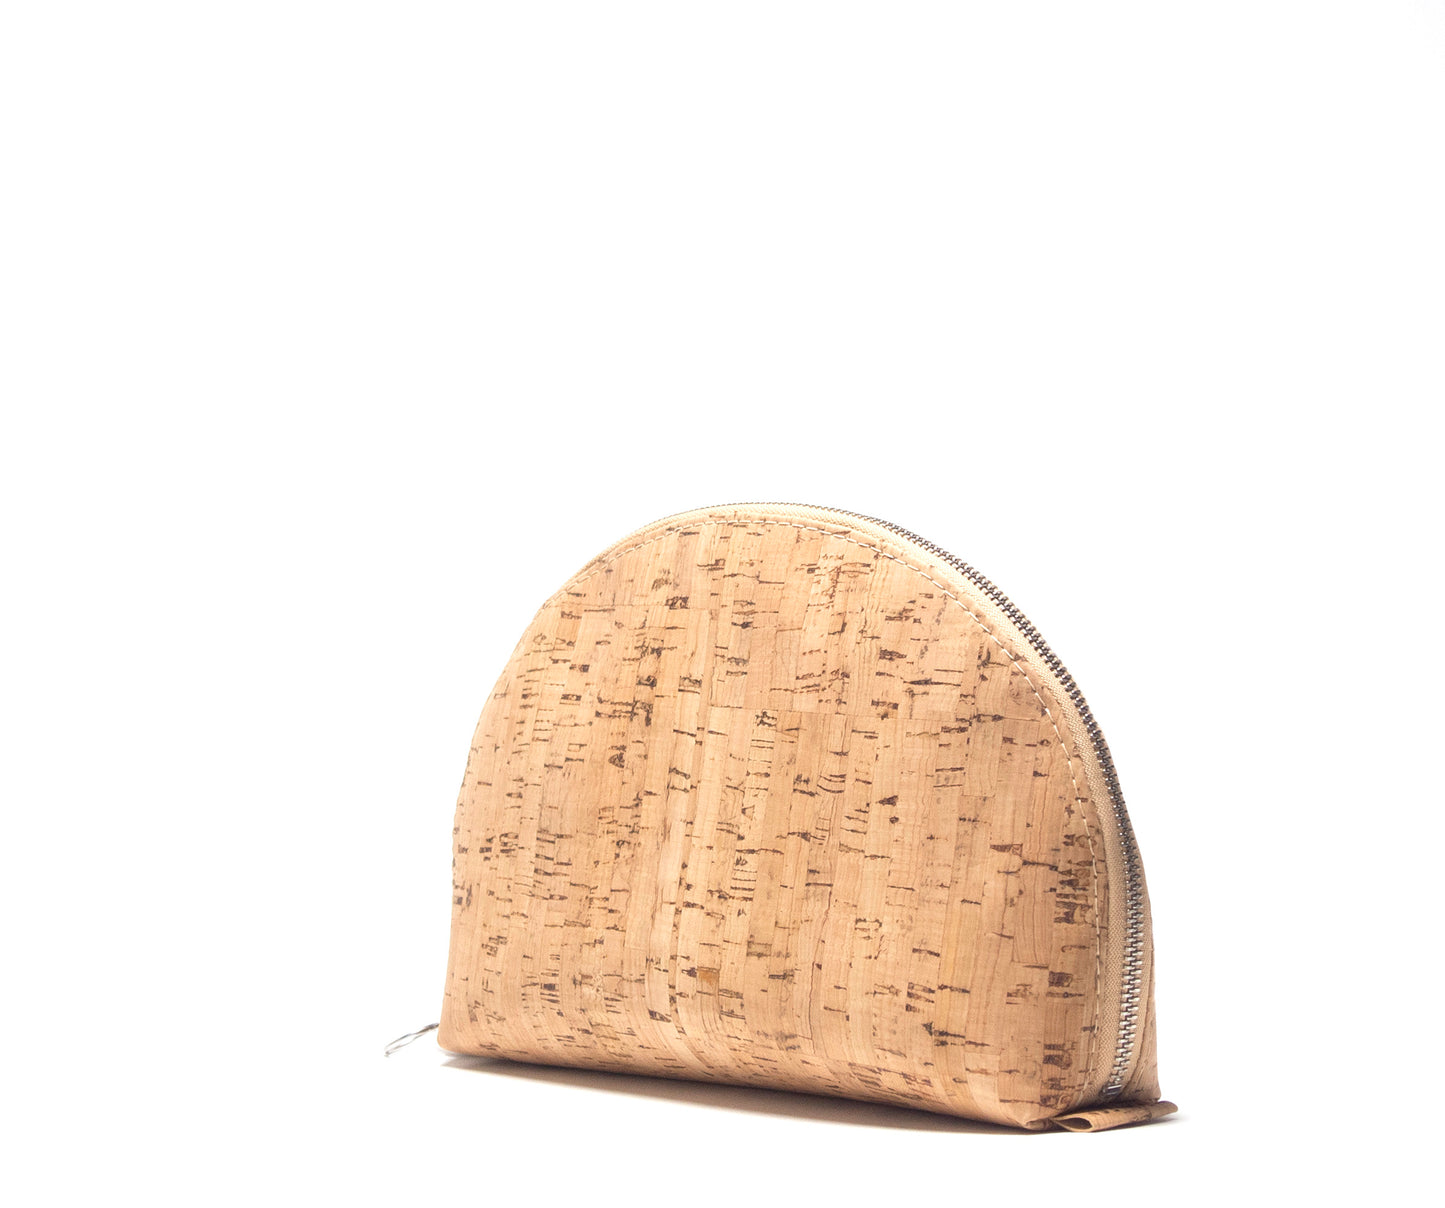 Aavi cork beauty bag, natural cork